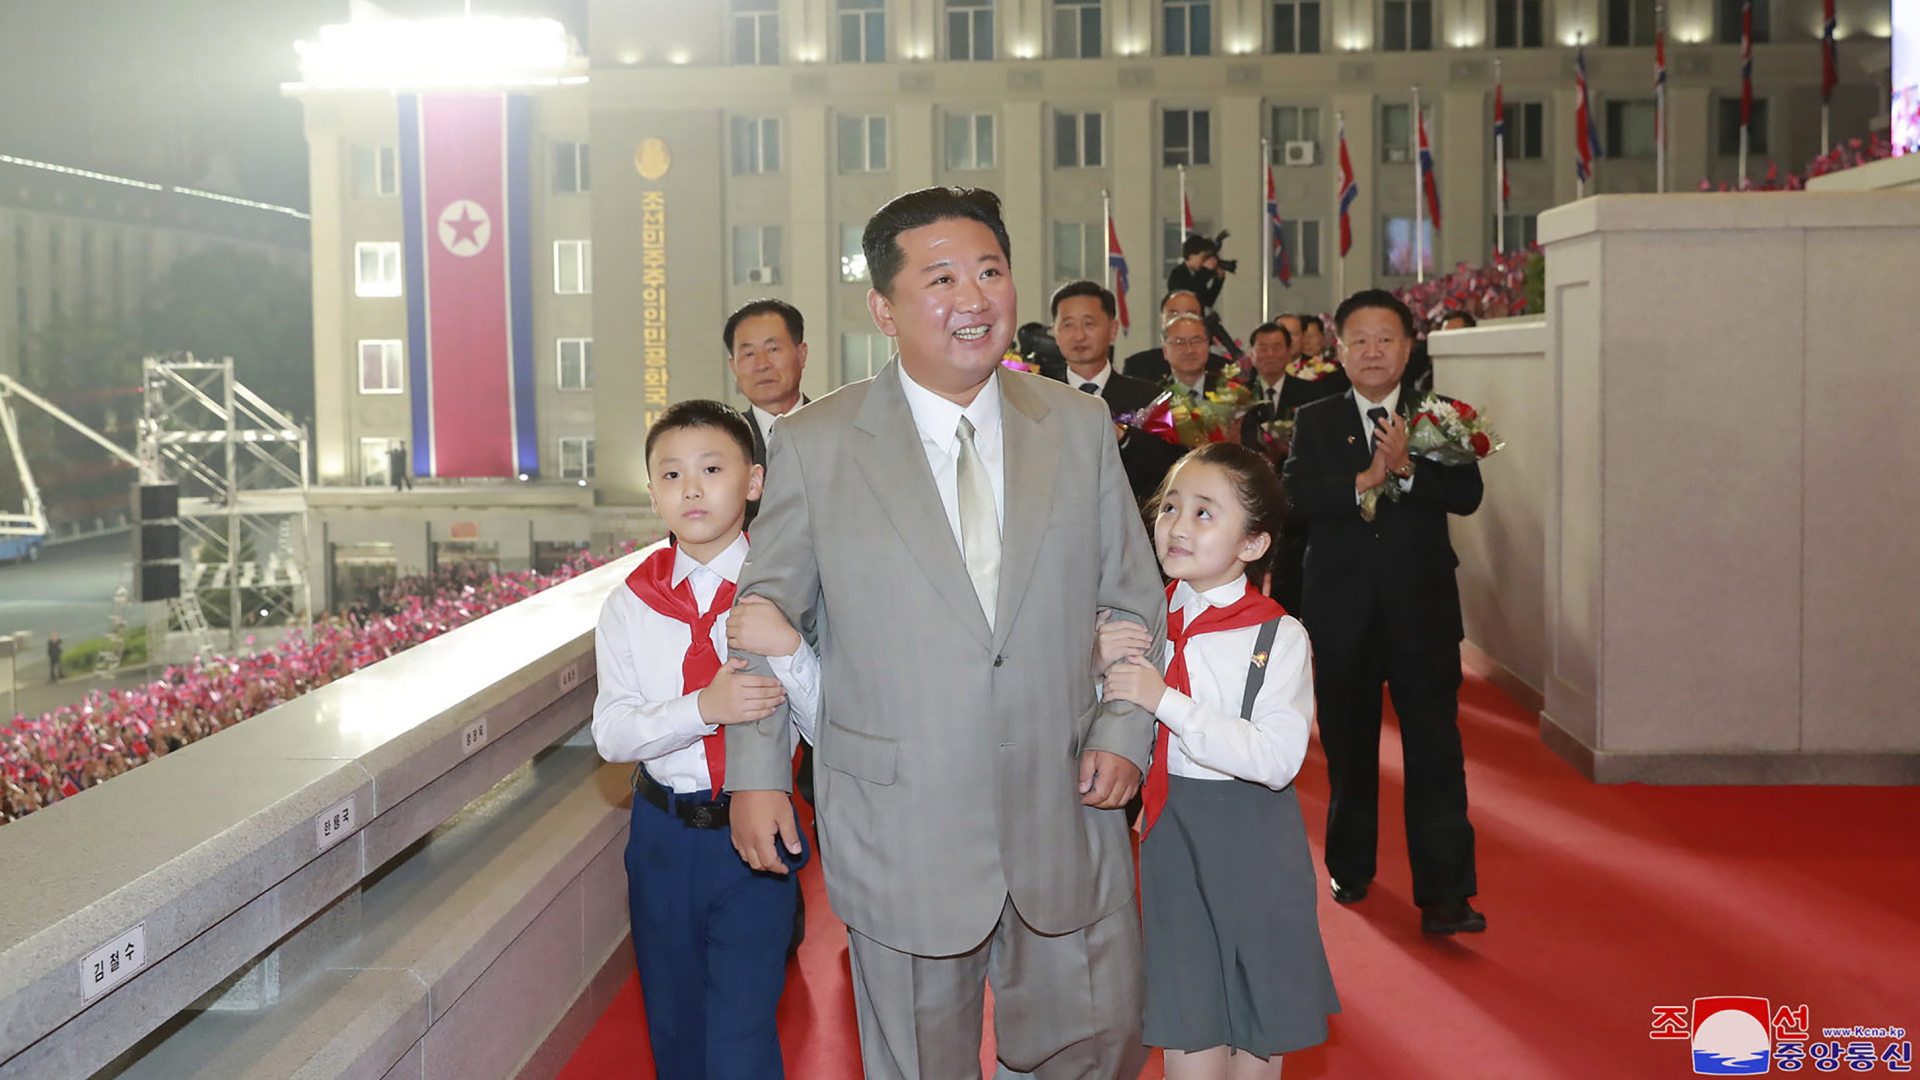 Kim Jong Un zeigt sich am 73. Jahrestag der Republikgründung Nordkoreas mit jungen Pionieren am Arm in Pjöngjang.